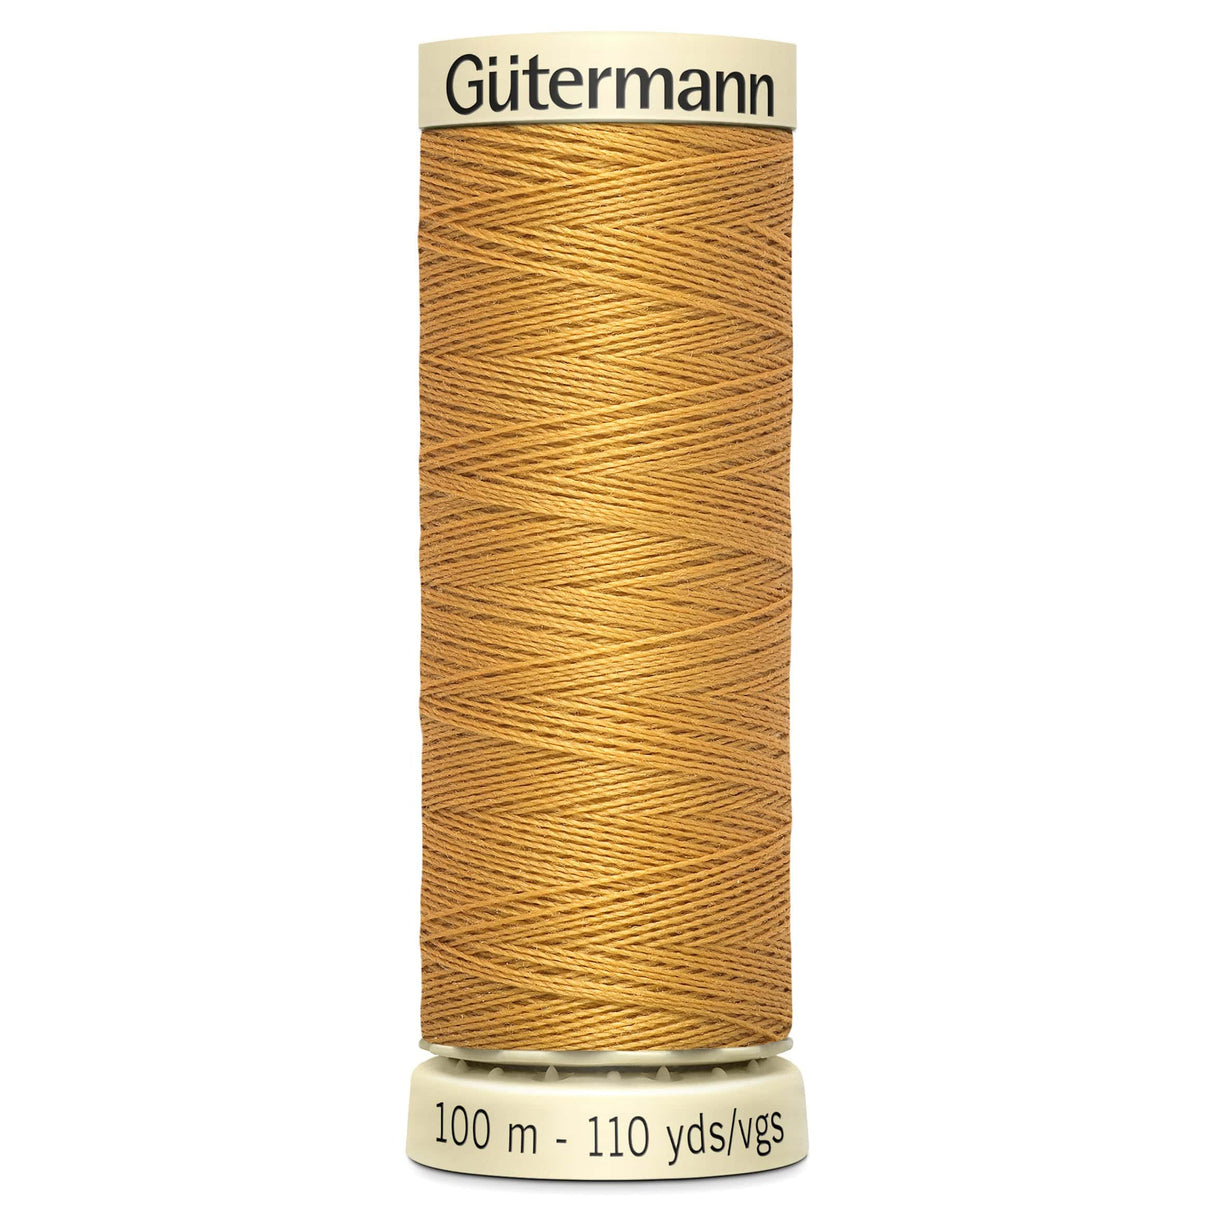 Groves Haberdashery 968 Gutermann Thread Sewing Cotton 100 m Black to Pink